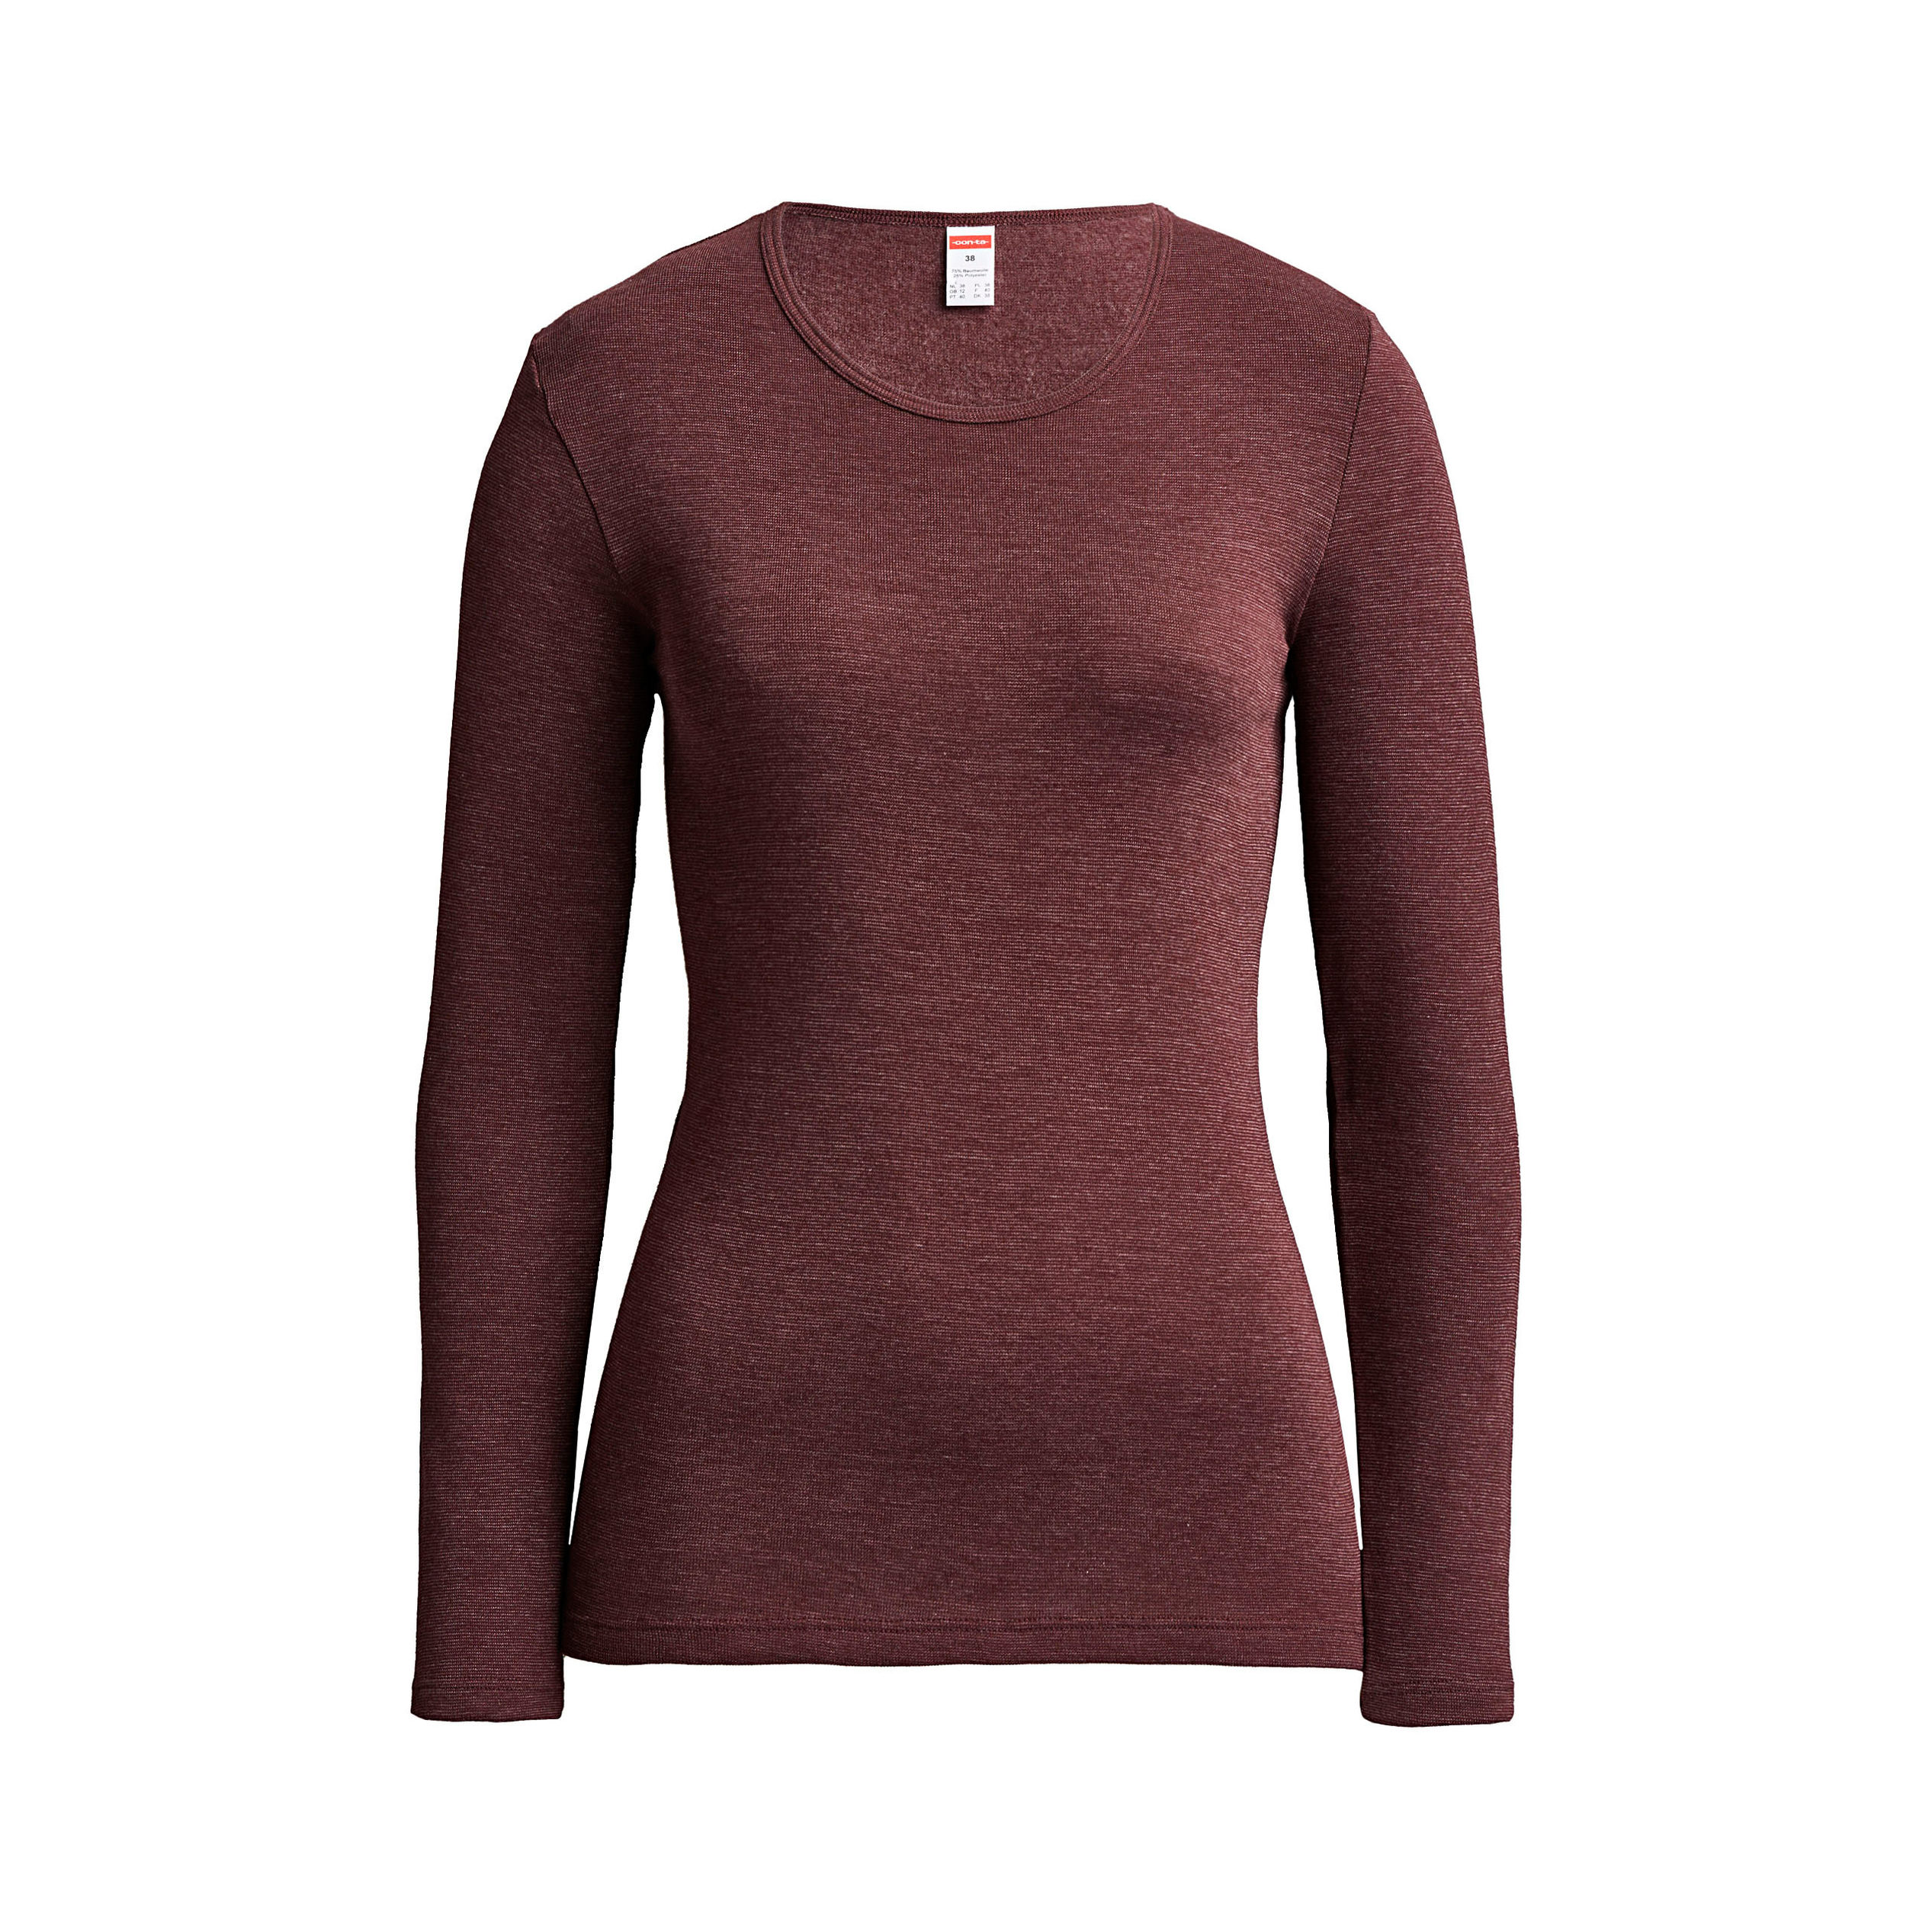 Damen Thermo-Langarmshirt Größe: 38 Bordeaux | Weltbild.at